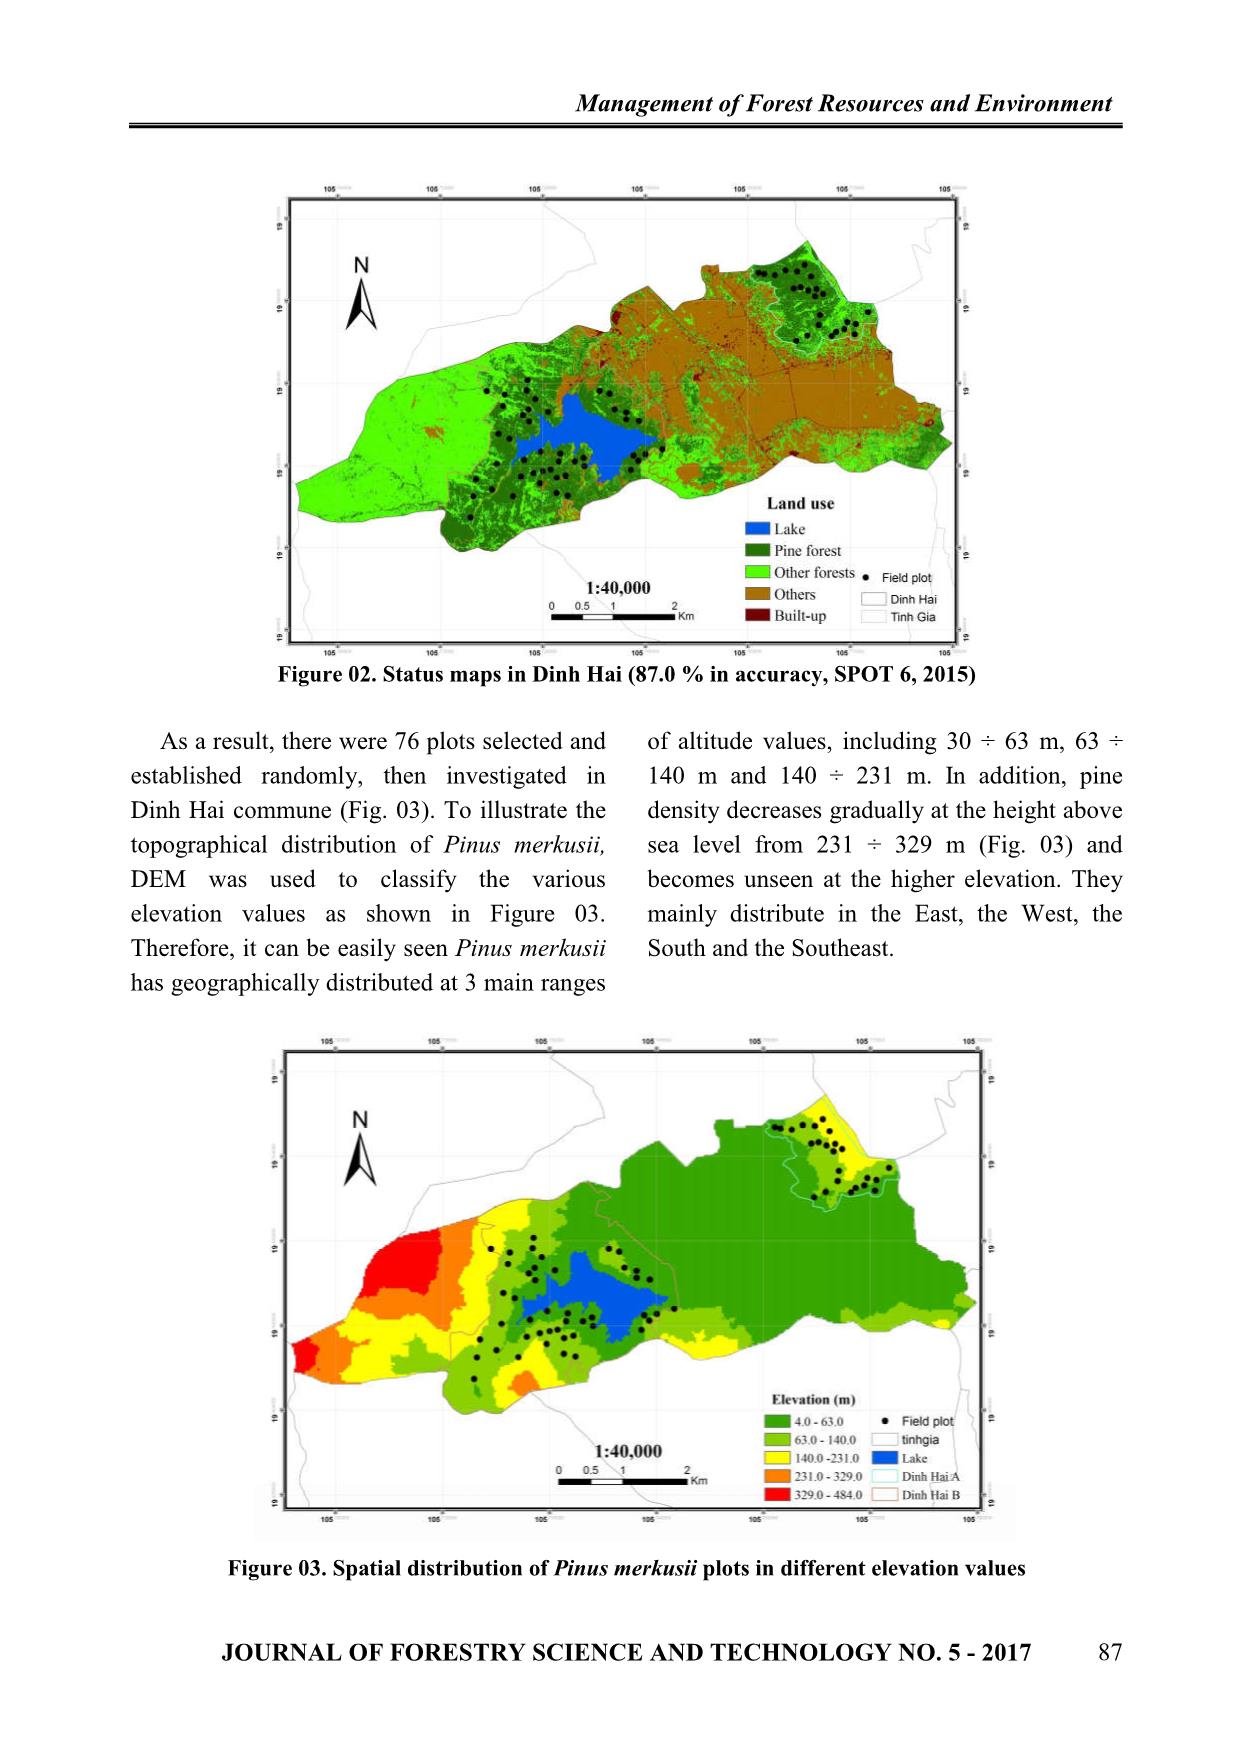 Using spot 6 to estimate biomass and carbon stocks of pinus merkusii plantation in Dinh Hai commune, Thanh Hoa province trang 4